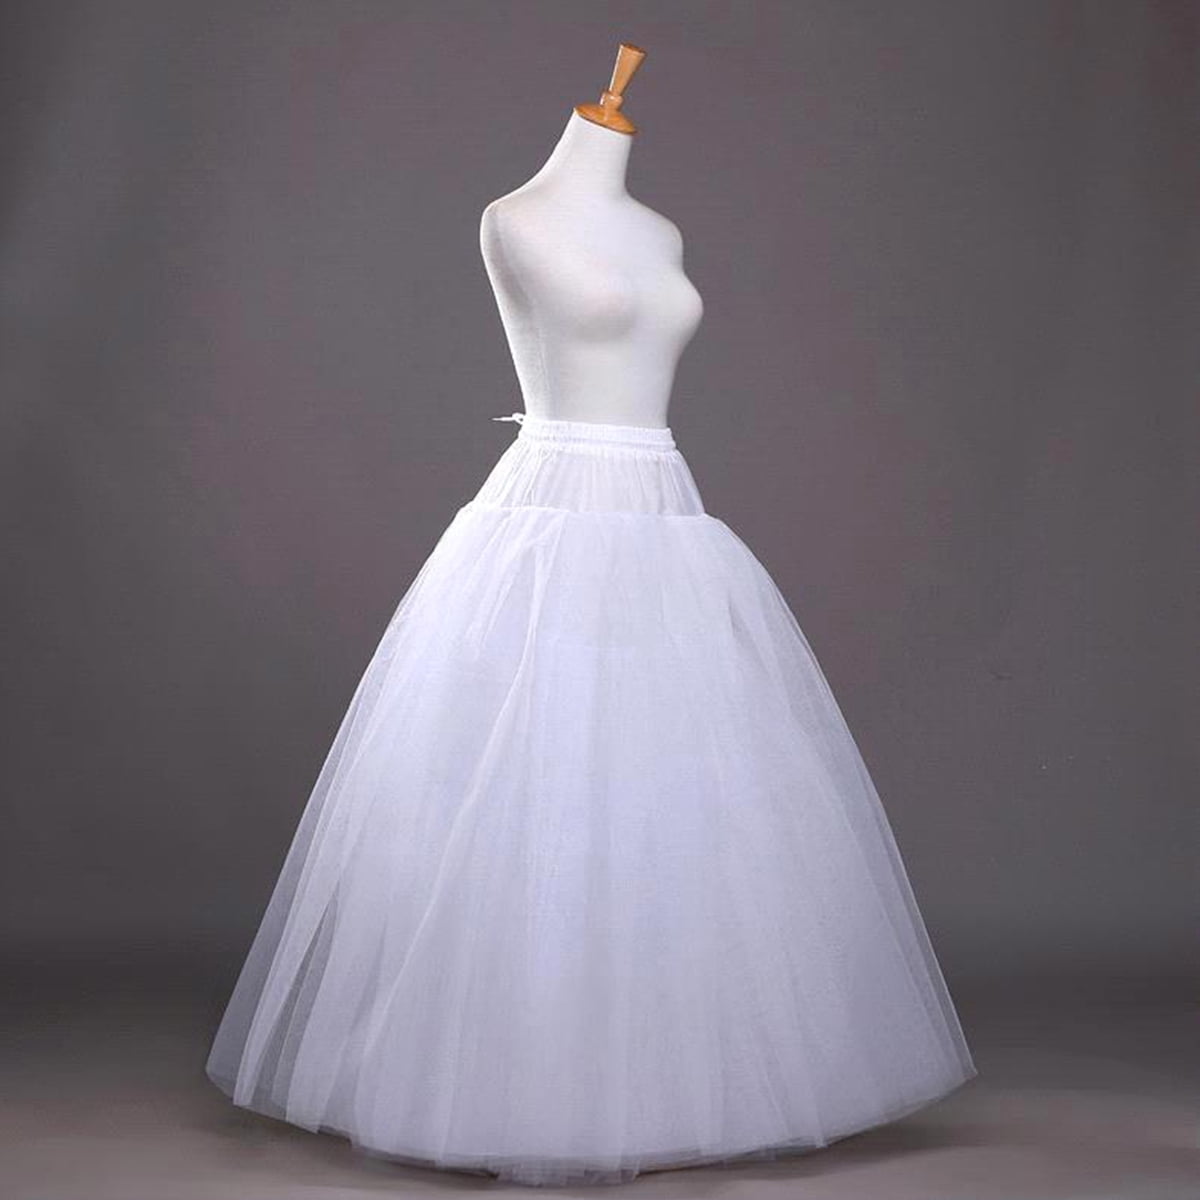 Newly Bridal Petticoat 4/8 Layer Elastic Waist Skirts Dancing Underskirt No Hoop 